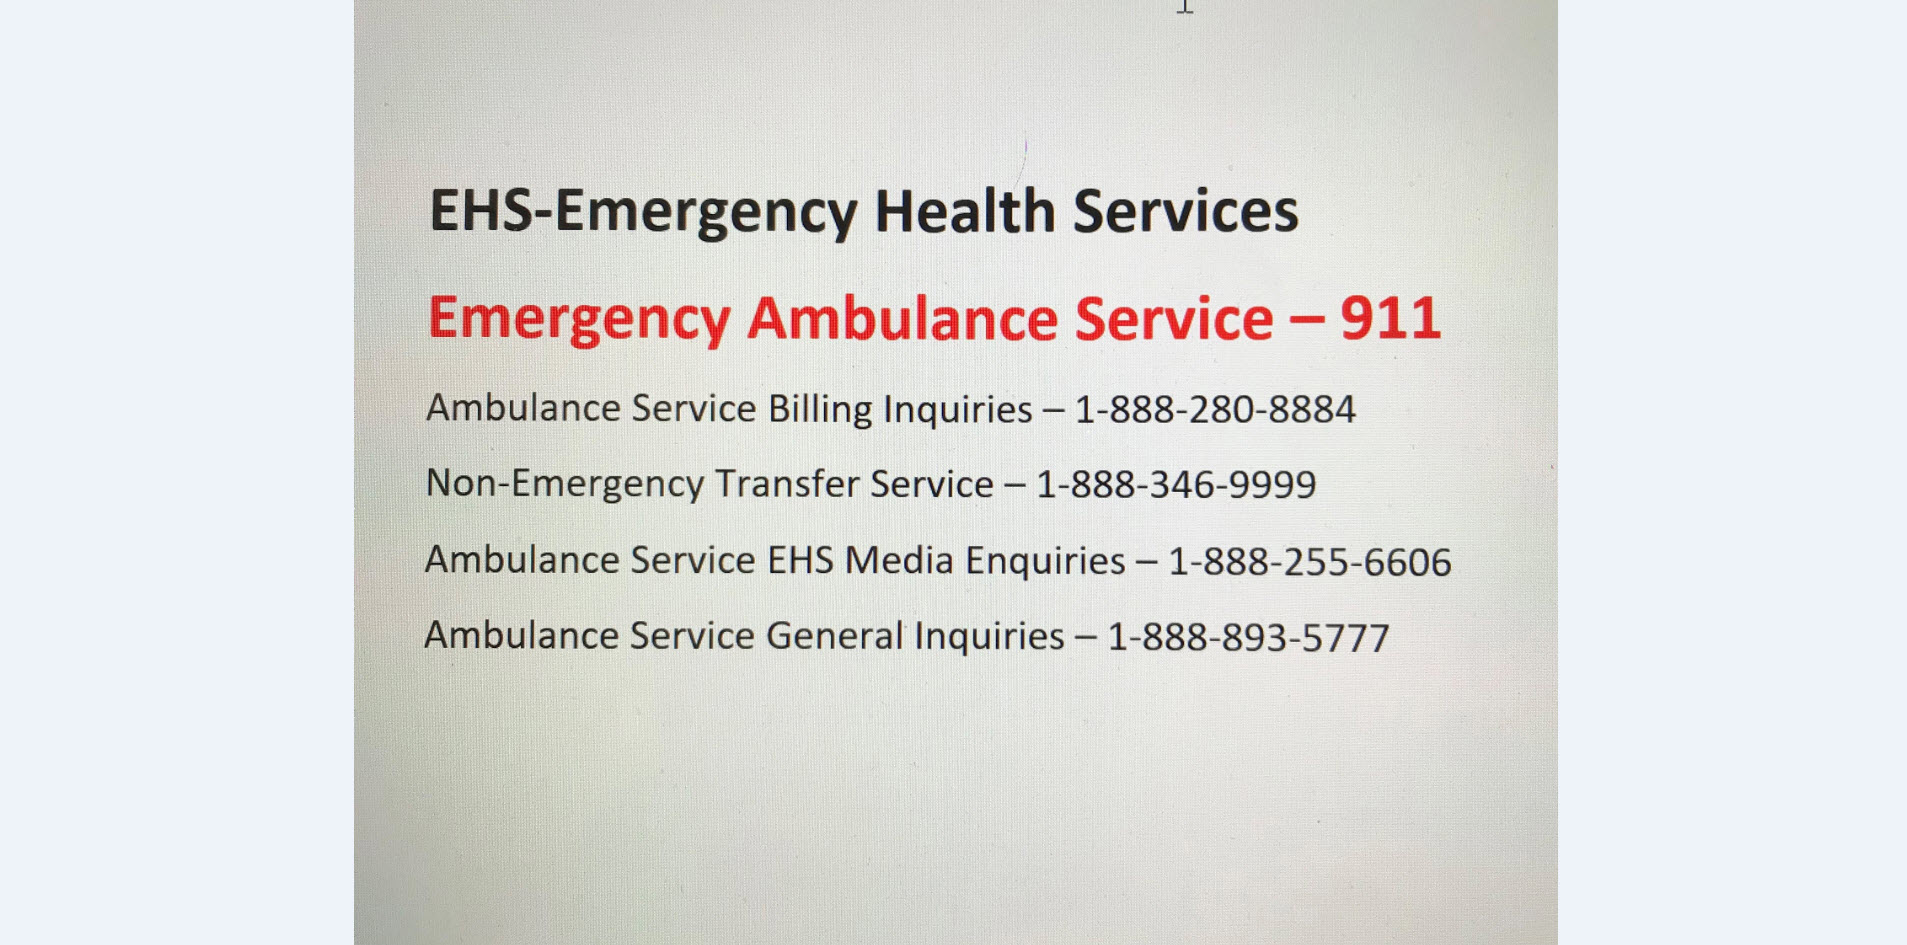 EHS-Emergency Health Services - Service d'ambulance